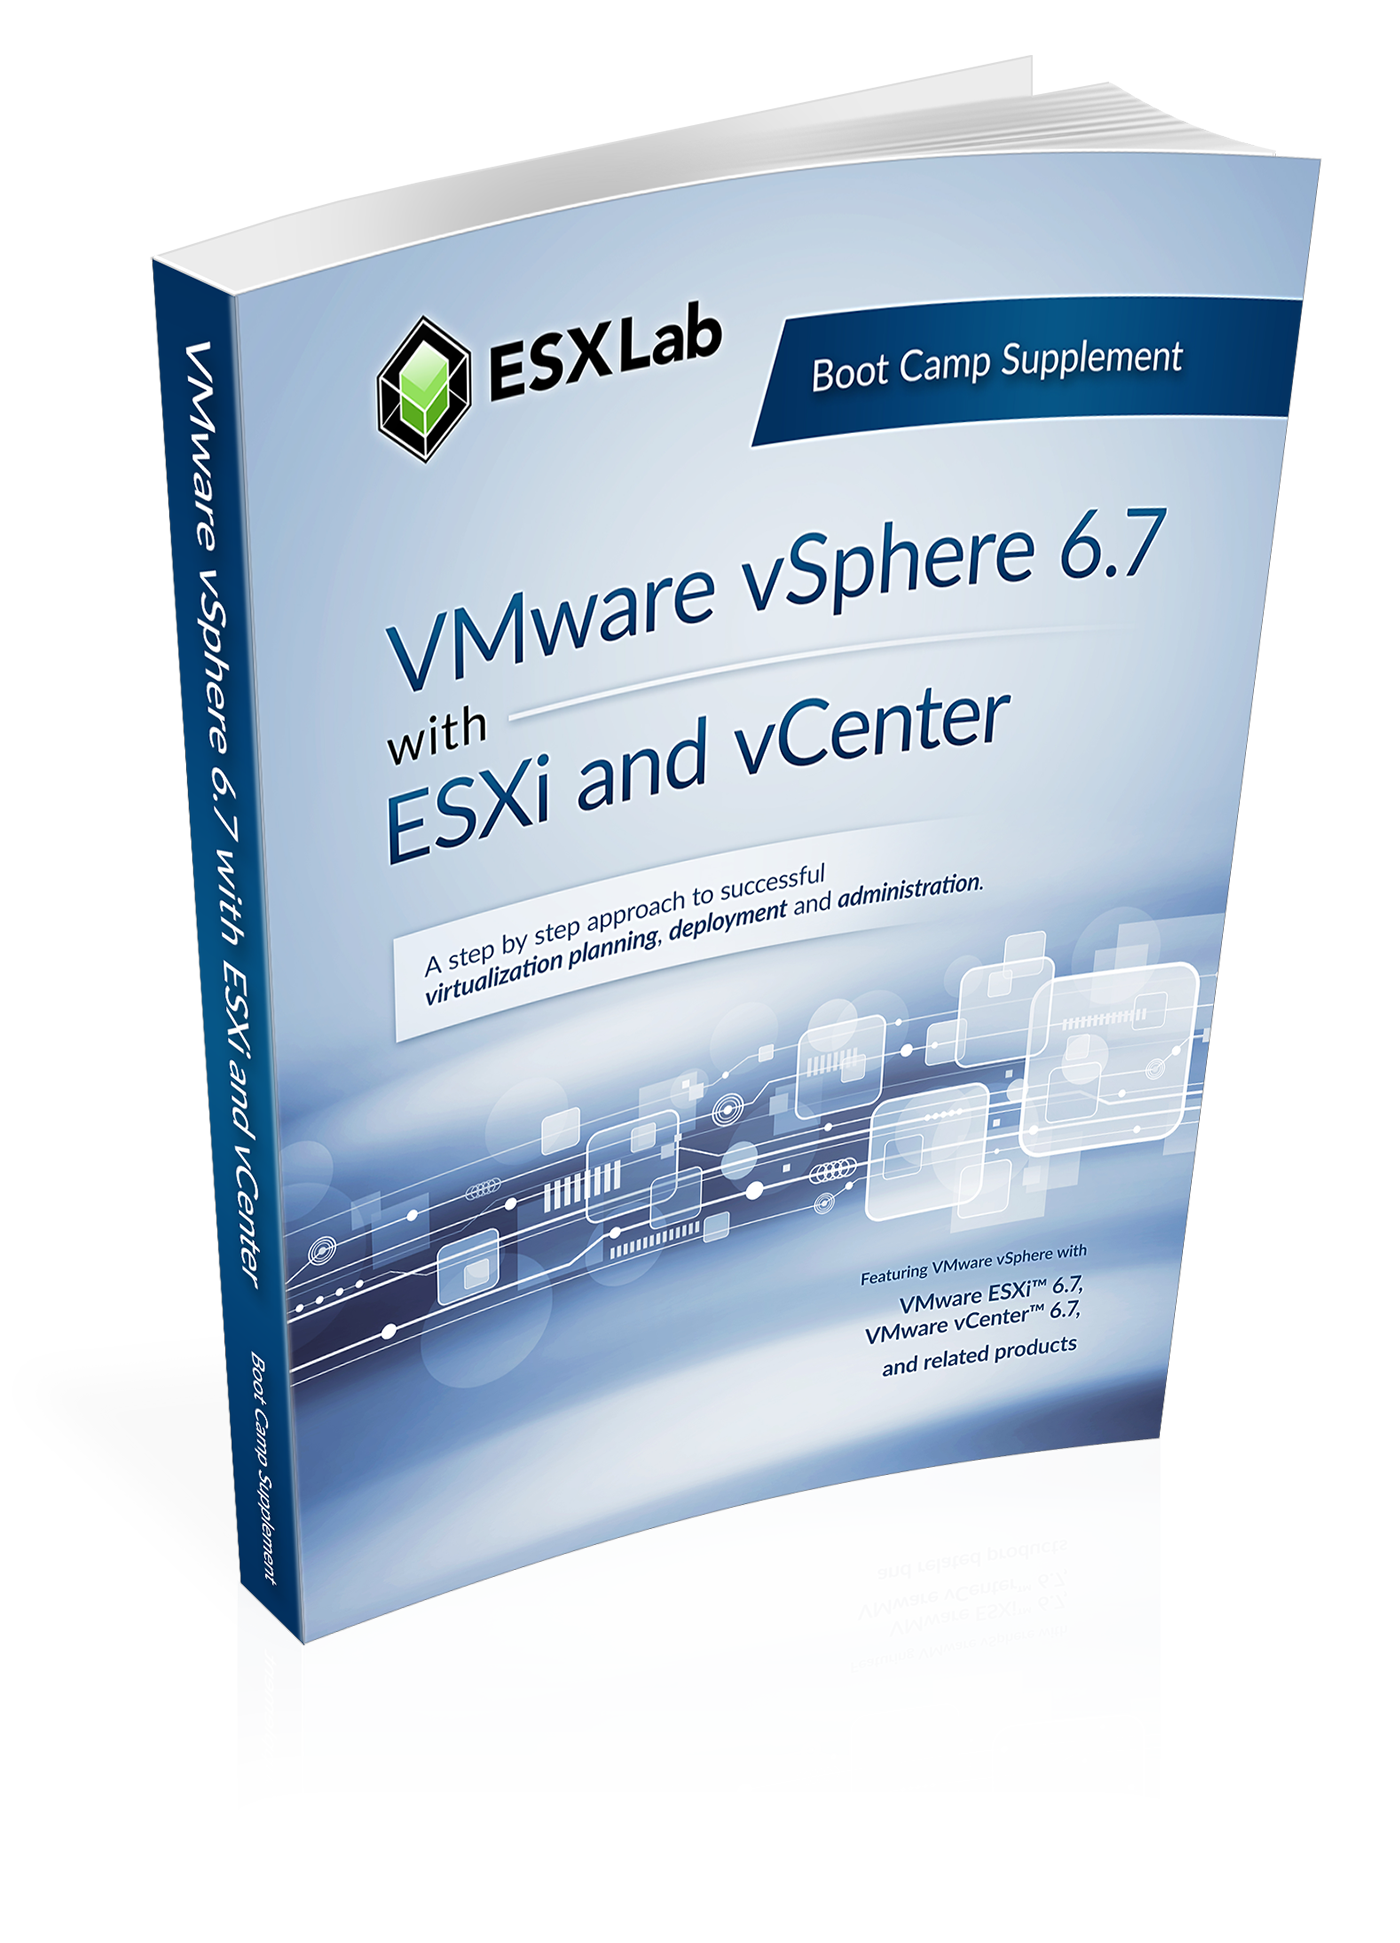 VMware vSphere 6.7 Boot Camp Supplement Guide